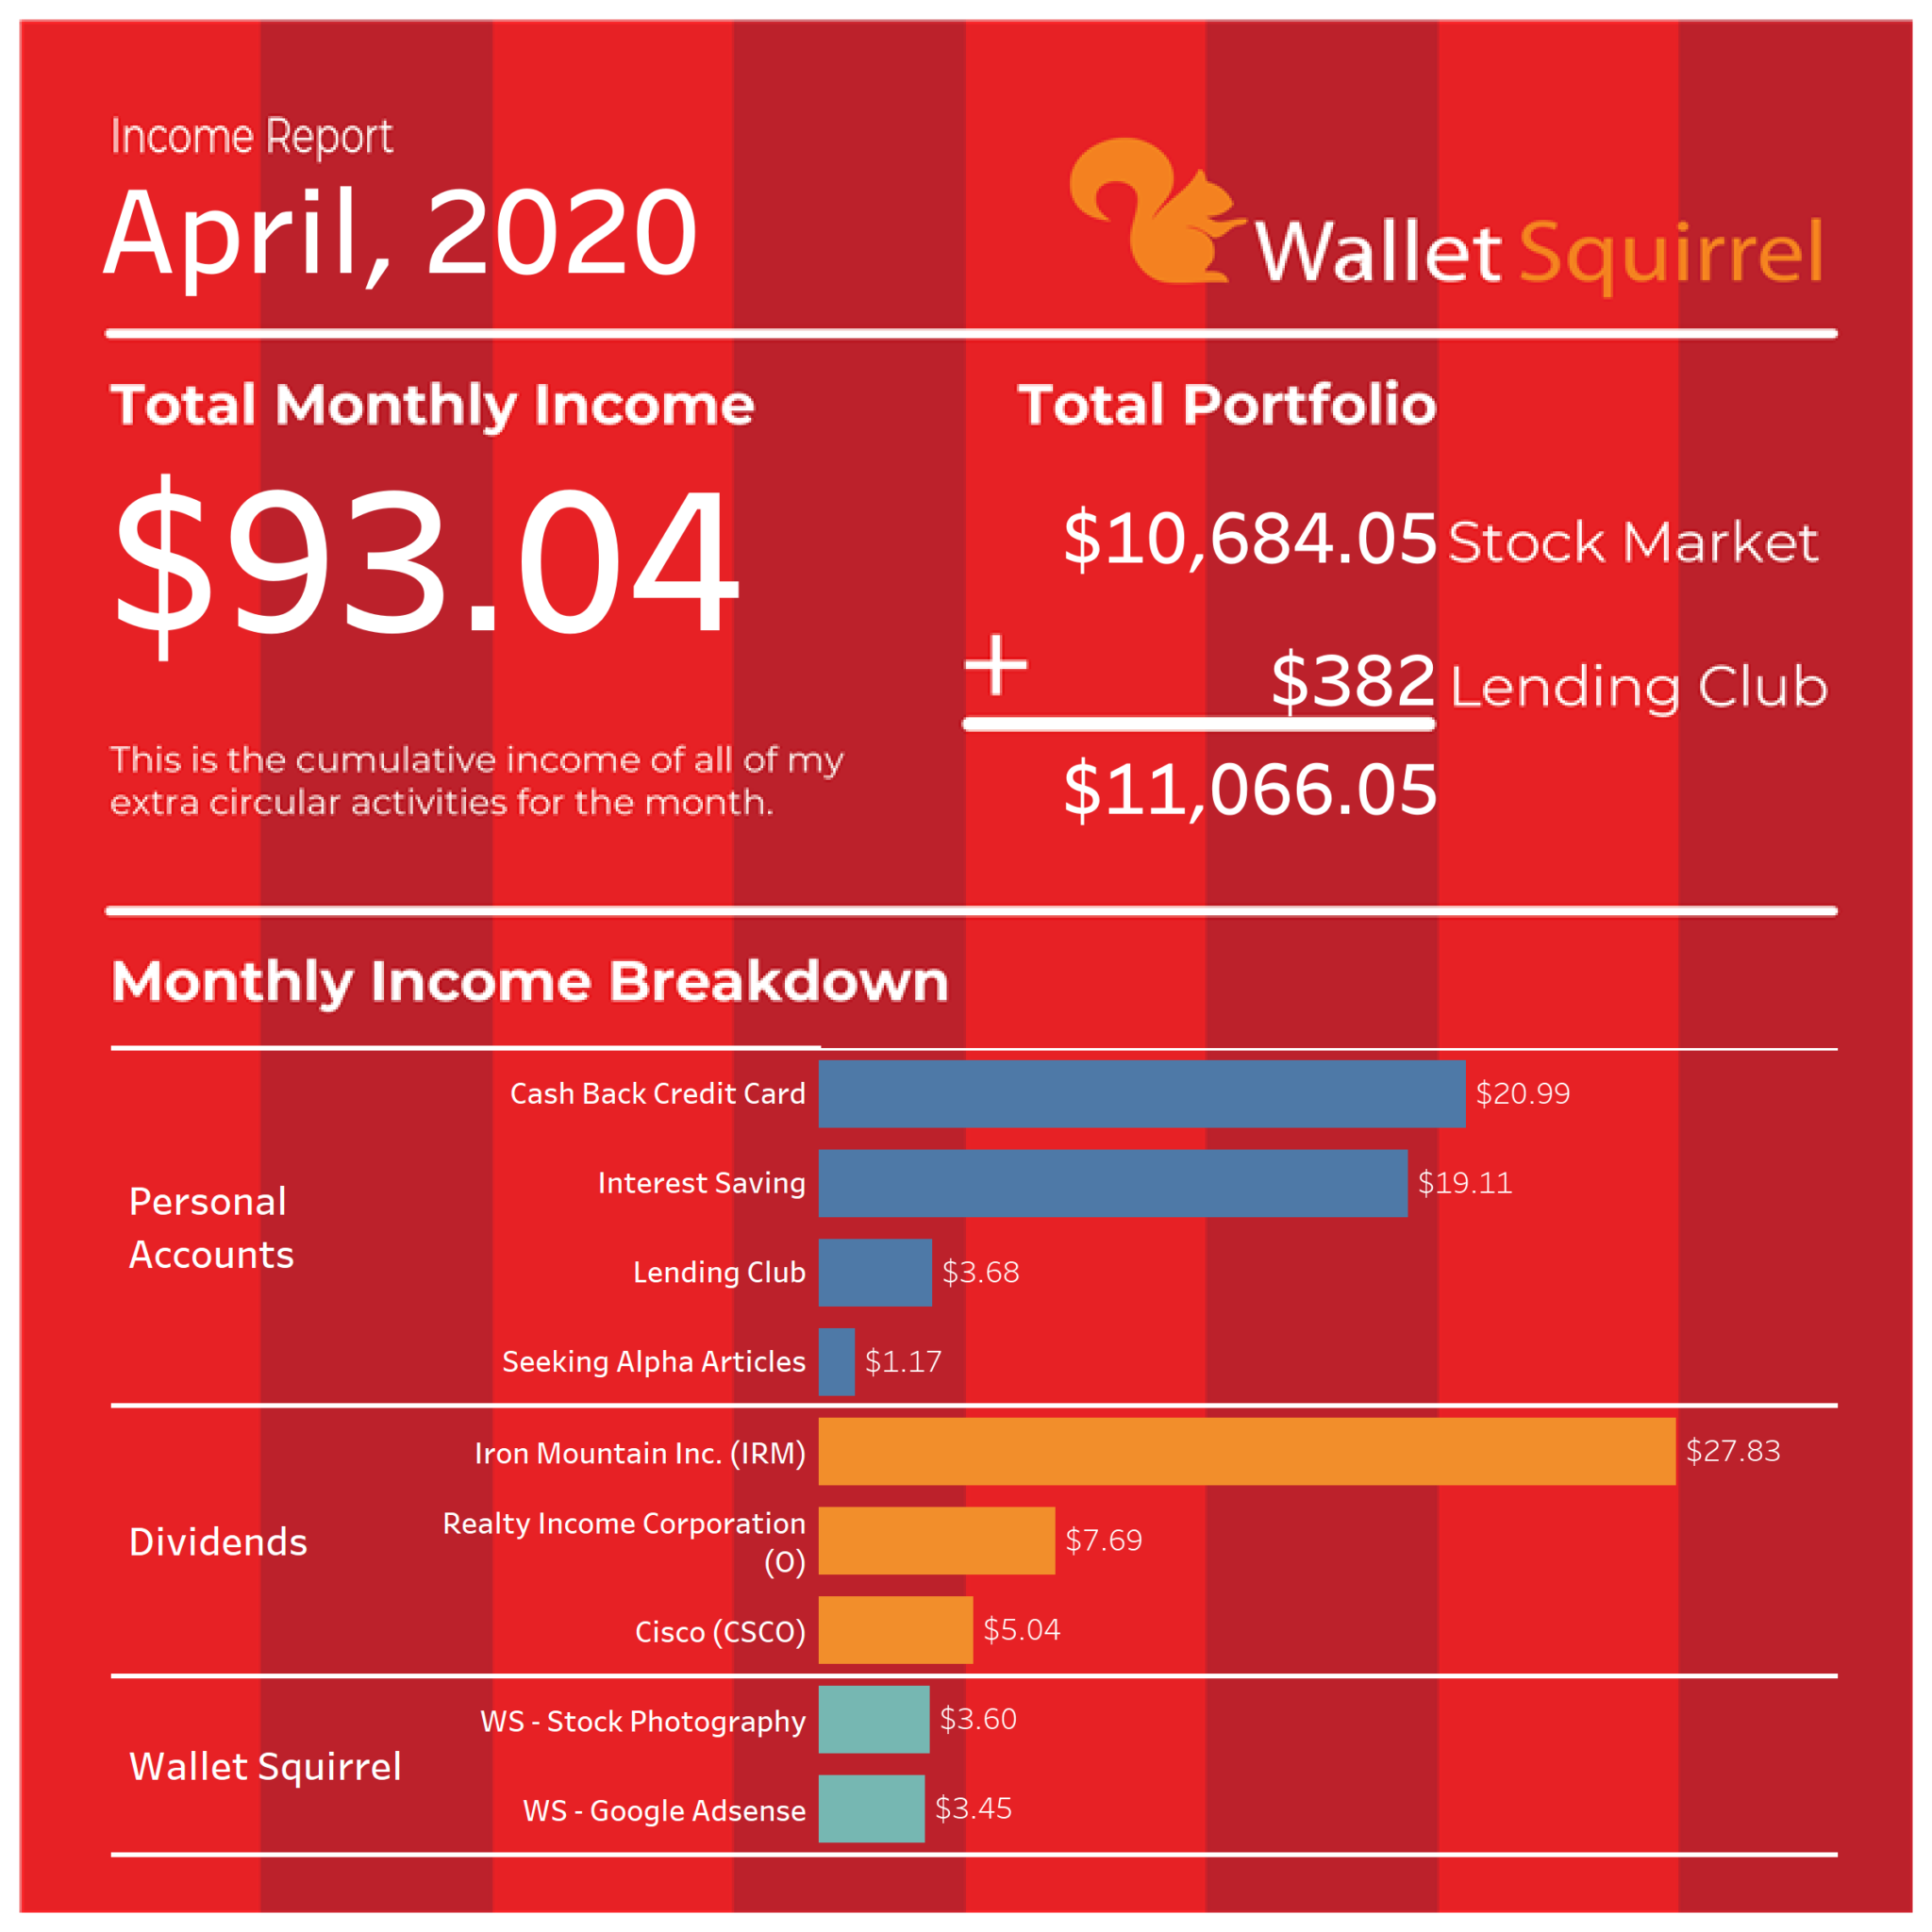 Wallet Squirrel's April 2020 income report.